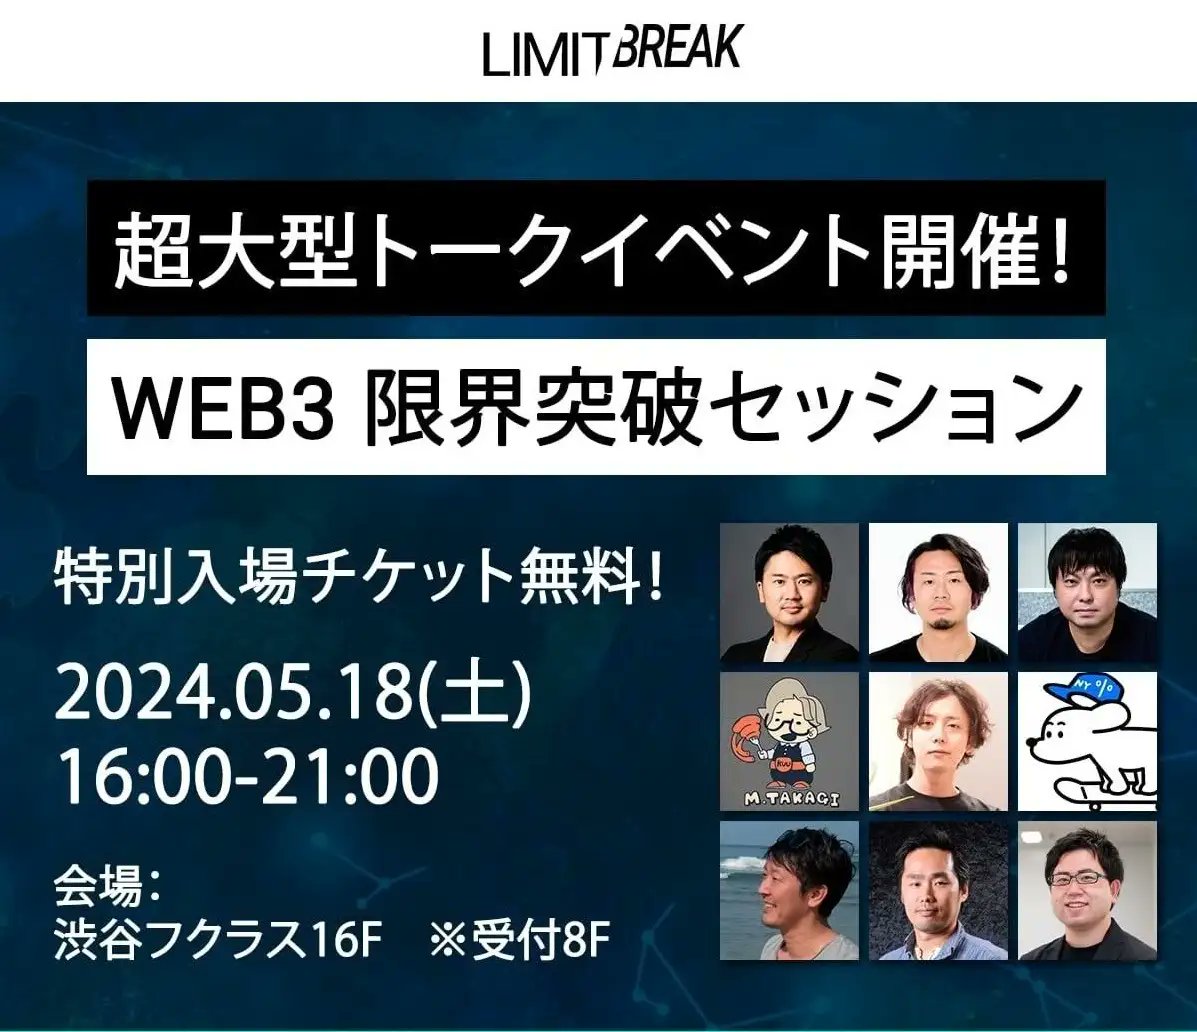 『WEB3限界突破トークセッション』に登壇決定 〜5月18日（土）16:30@渋谷フクラスにて開催〜 web3-limitbreak0518.peatix.com